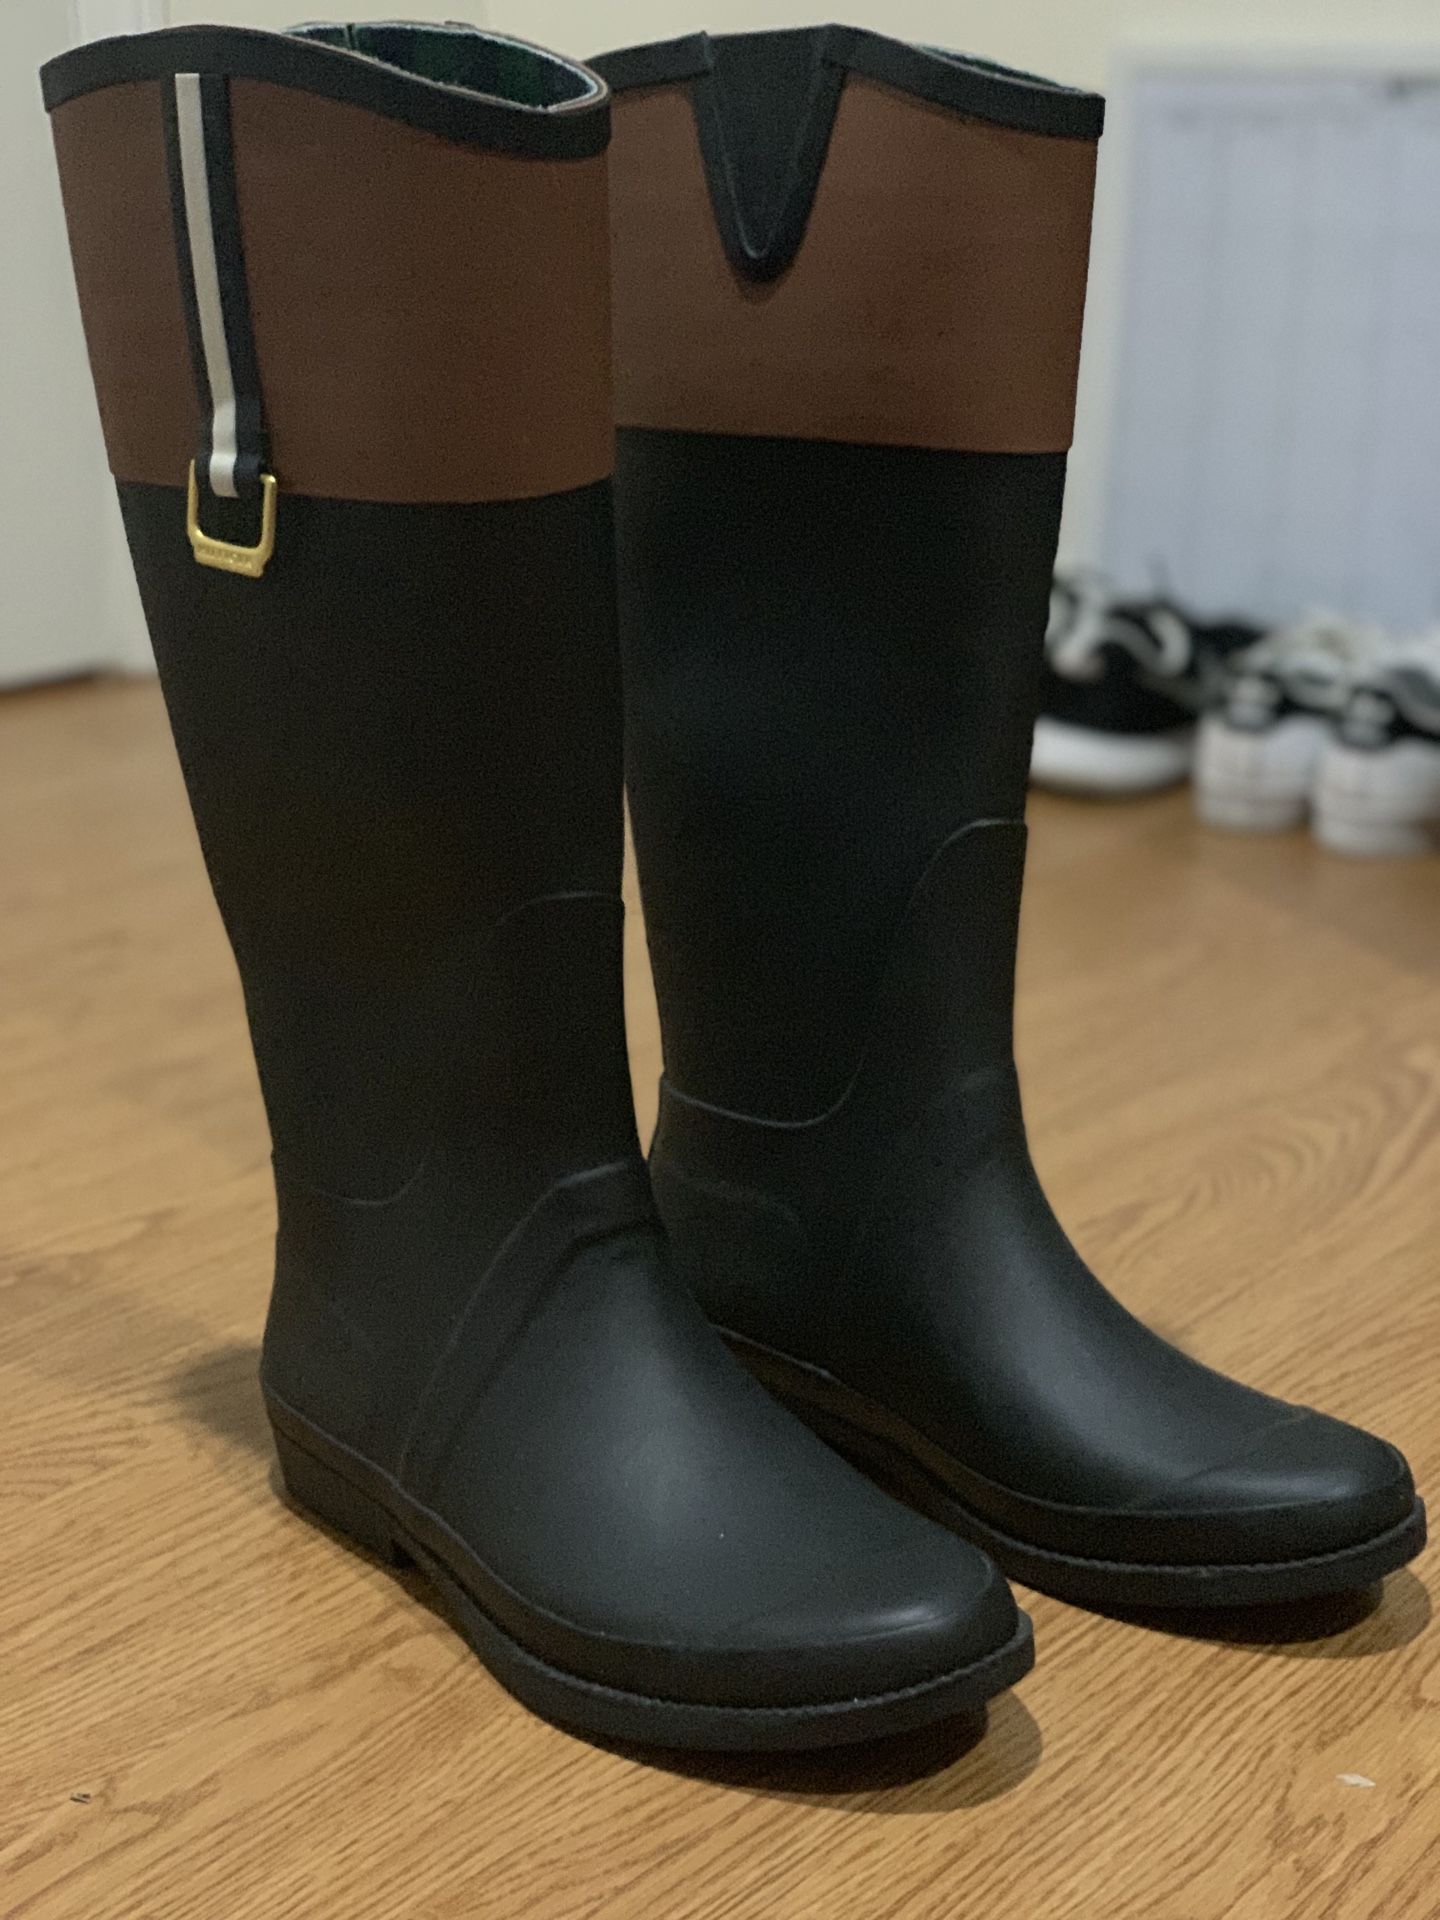 Tommy Hilfiger Rain boots size 8